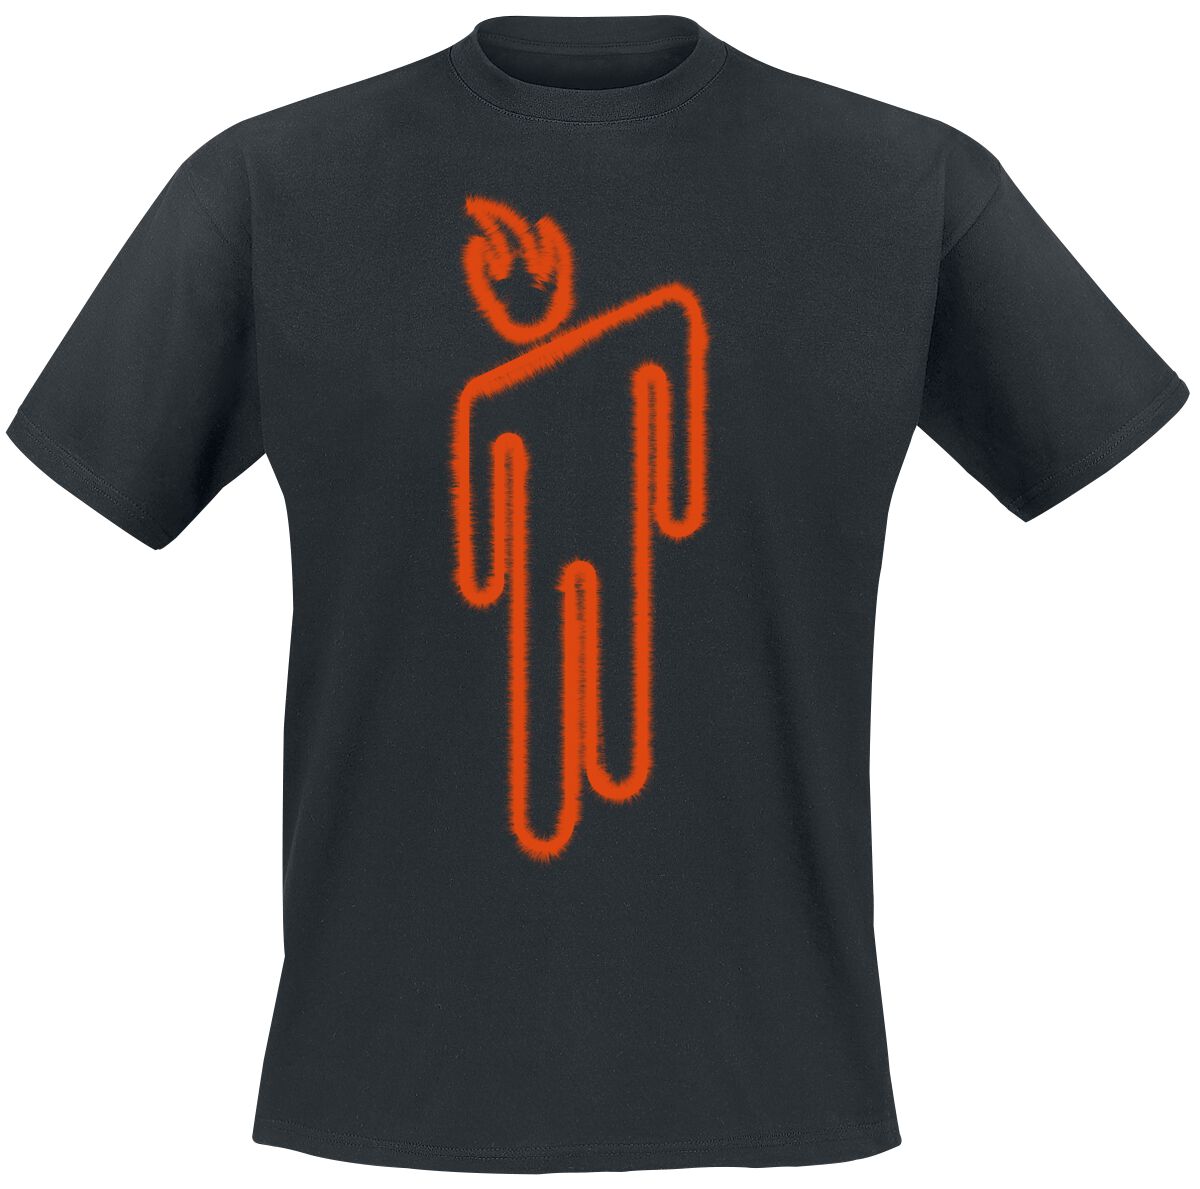 Image of T-Shirt di Billie Eilish - Fire Blohsh - S a M - Uomo - nero